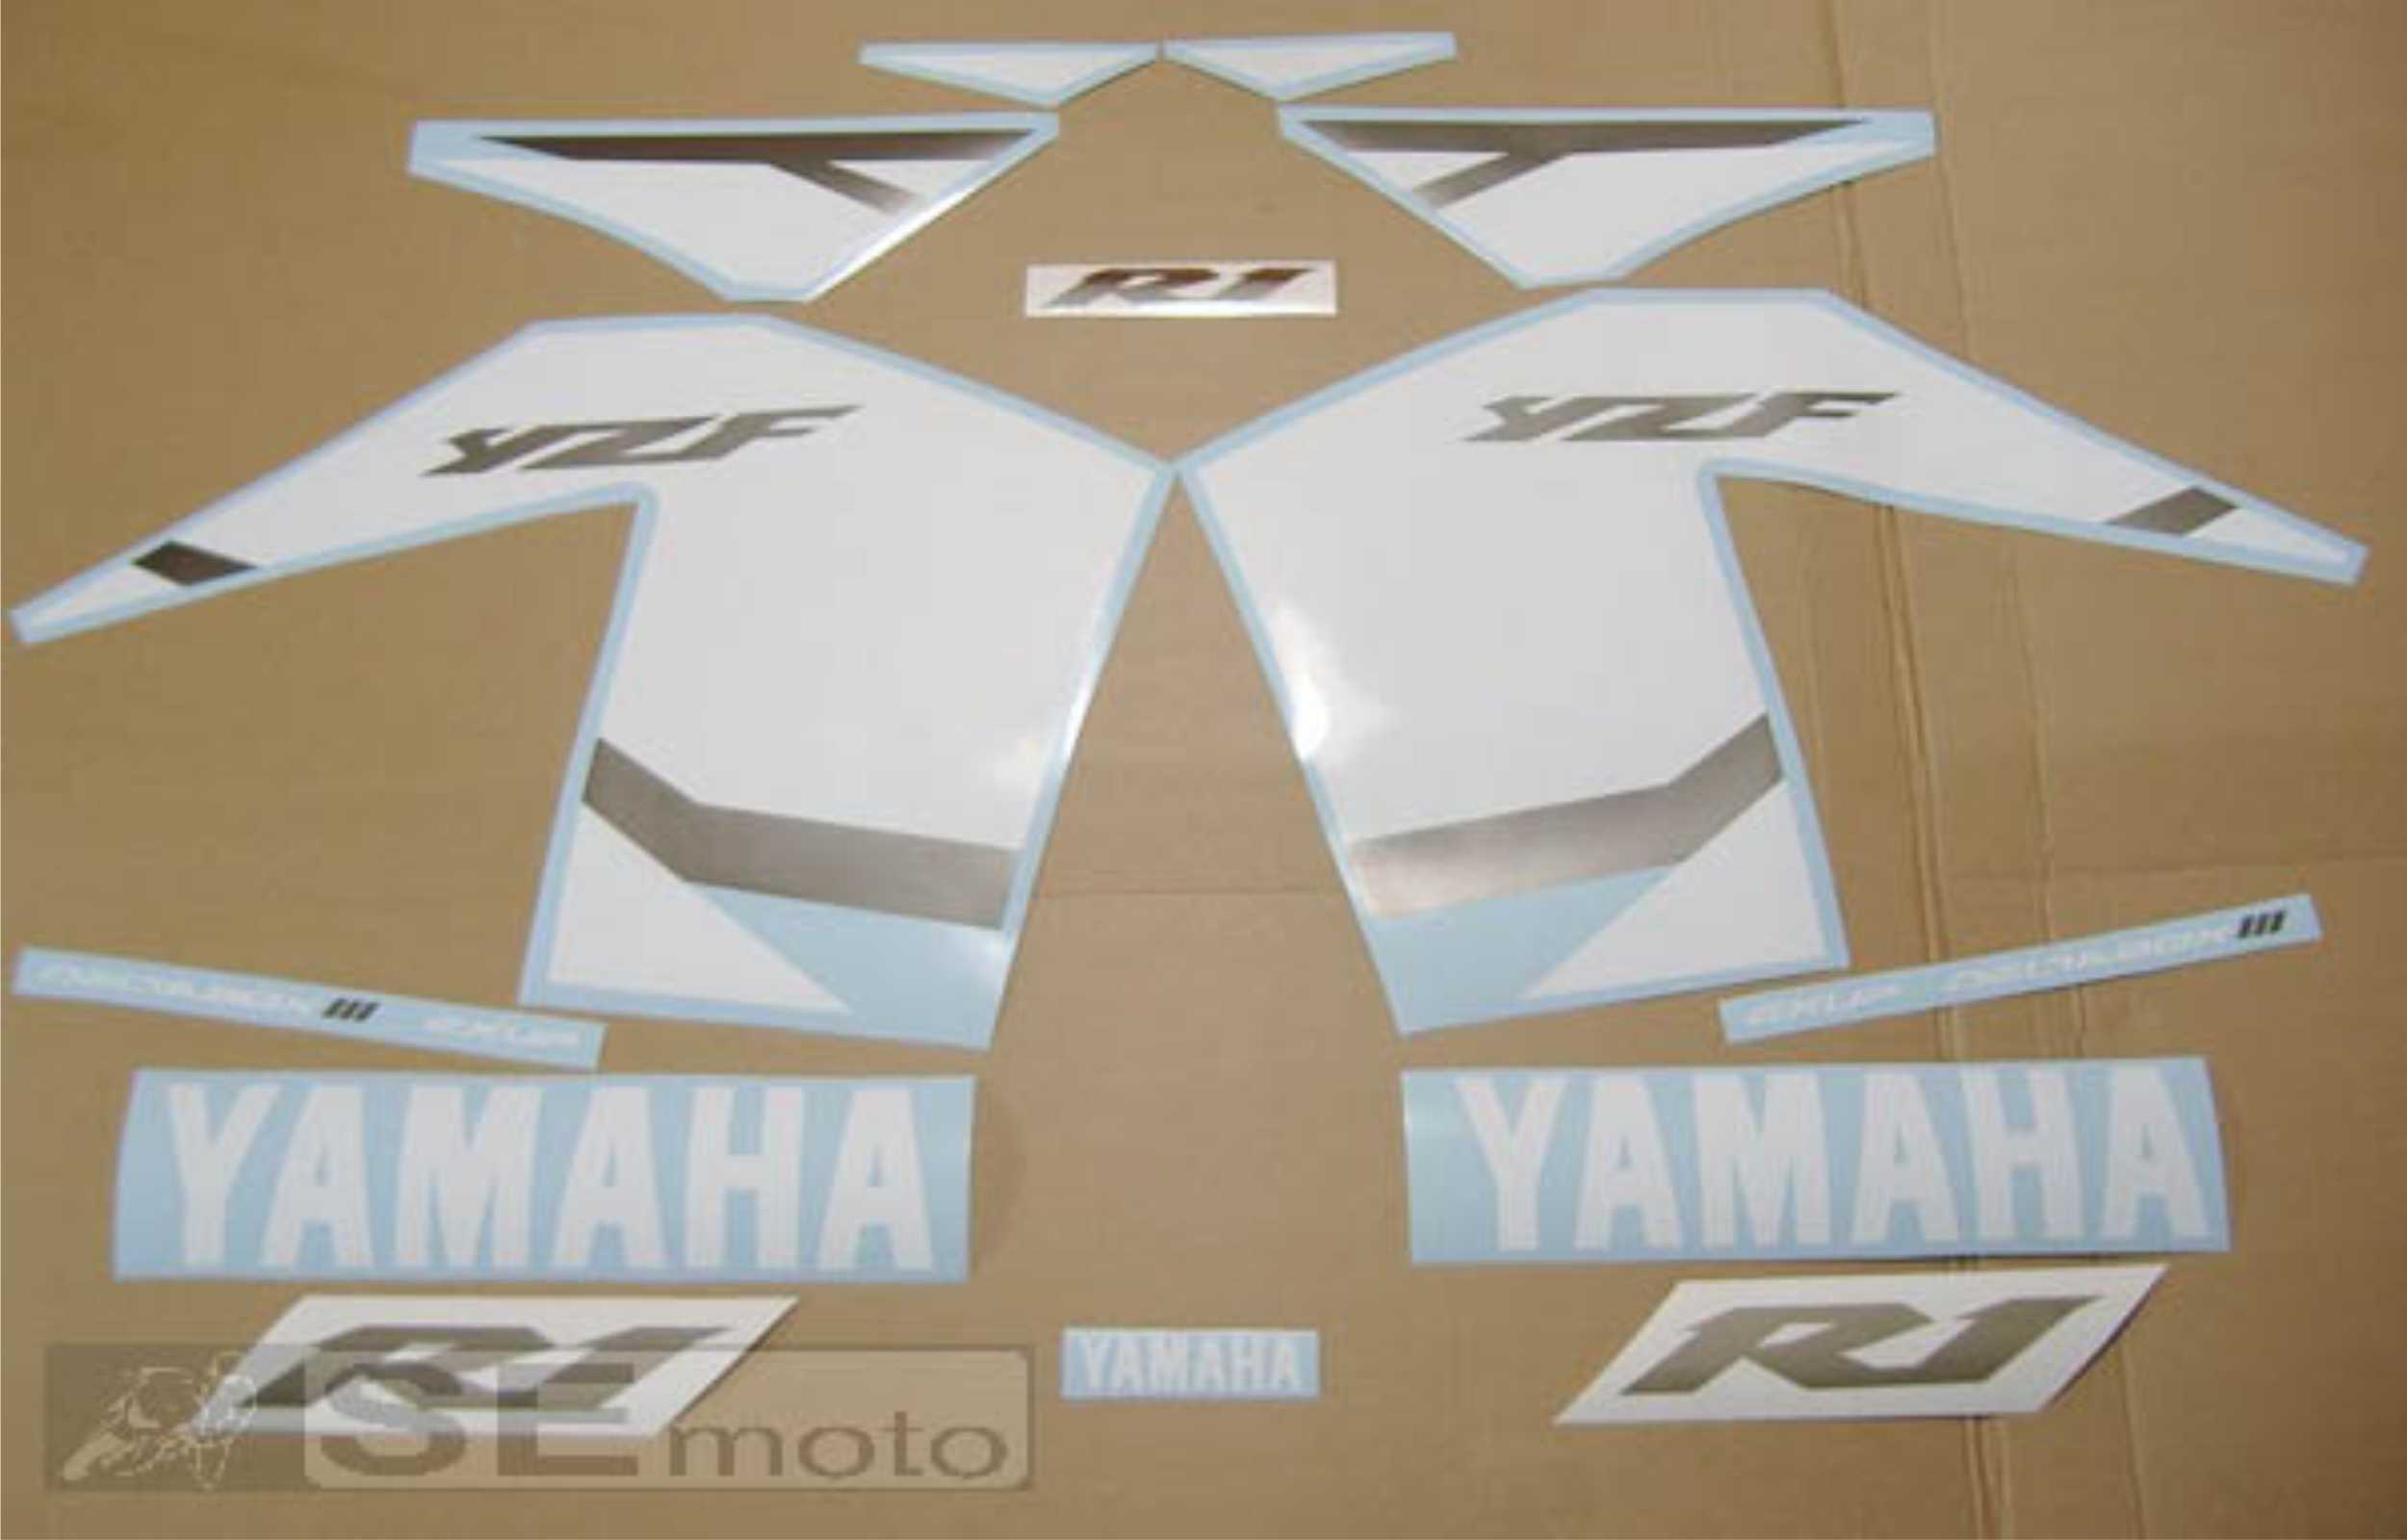 Yamaha YZF-R1 2002 синий- фото2